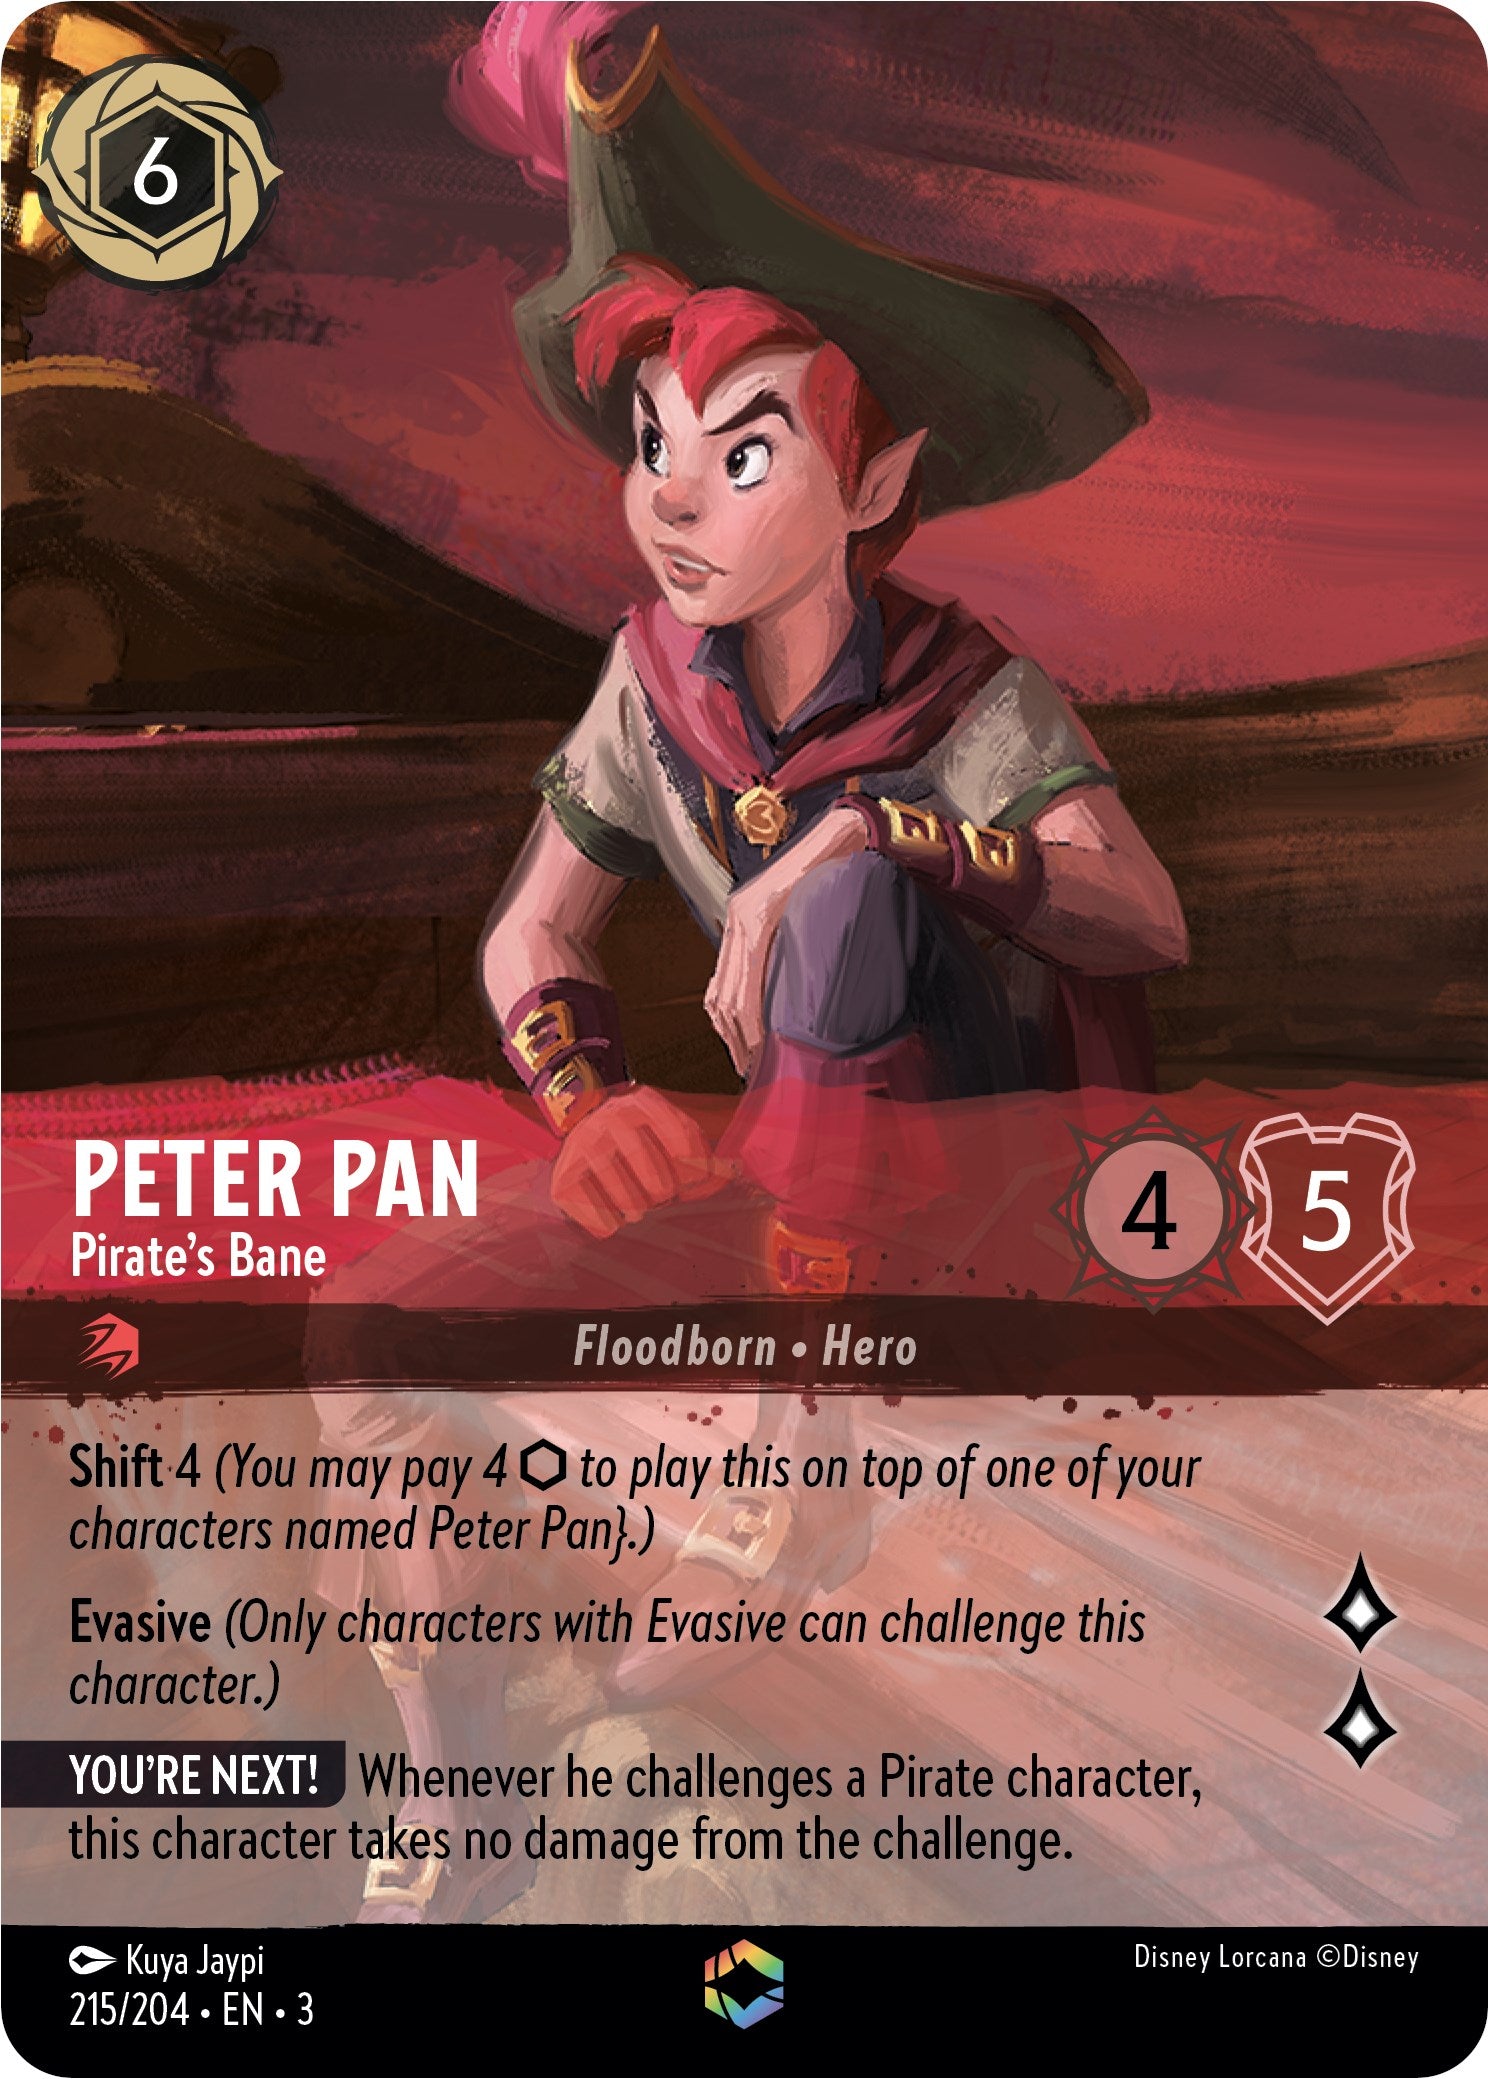 Peter Pan - Pirate's Bane (Alternate Art) (215/204) [Into the Inklands]